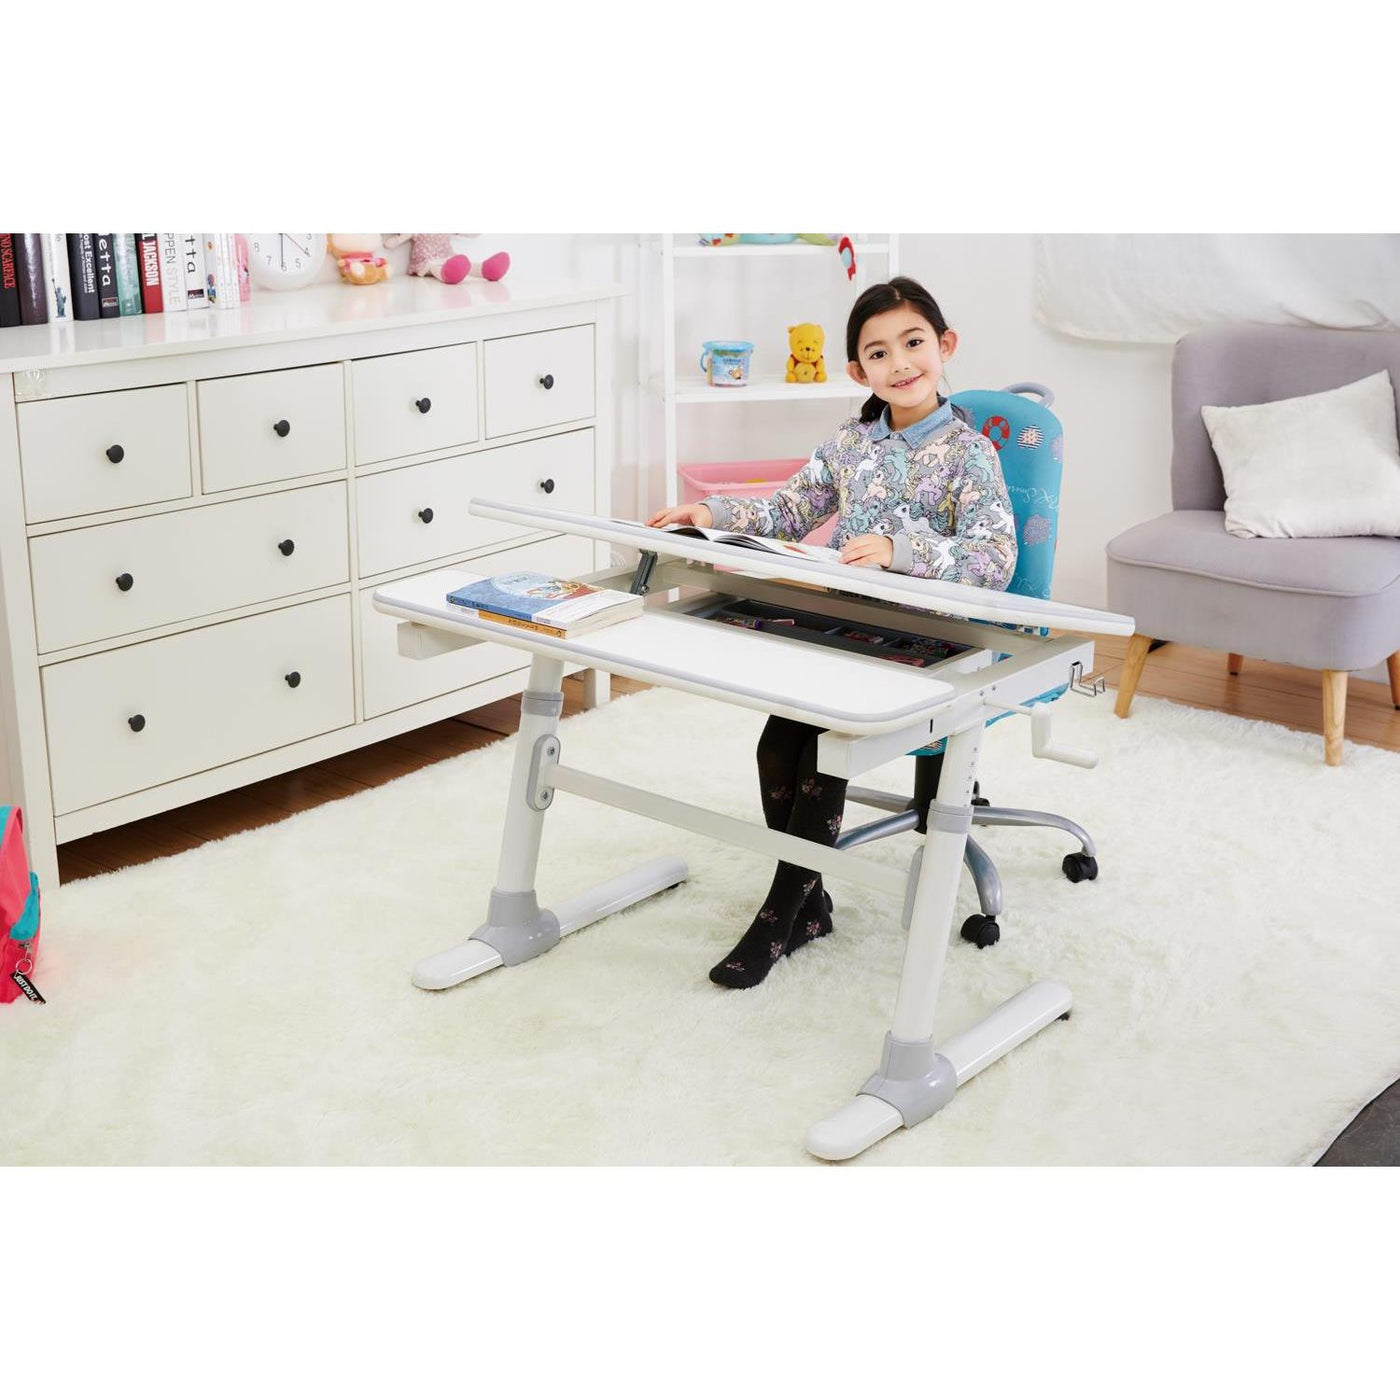 Ergo Office children ergonomic height adjustable desk, grey, max 100kg, ER-417 2cz